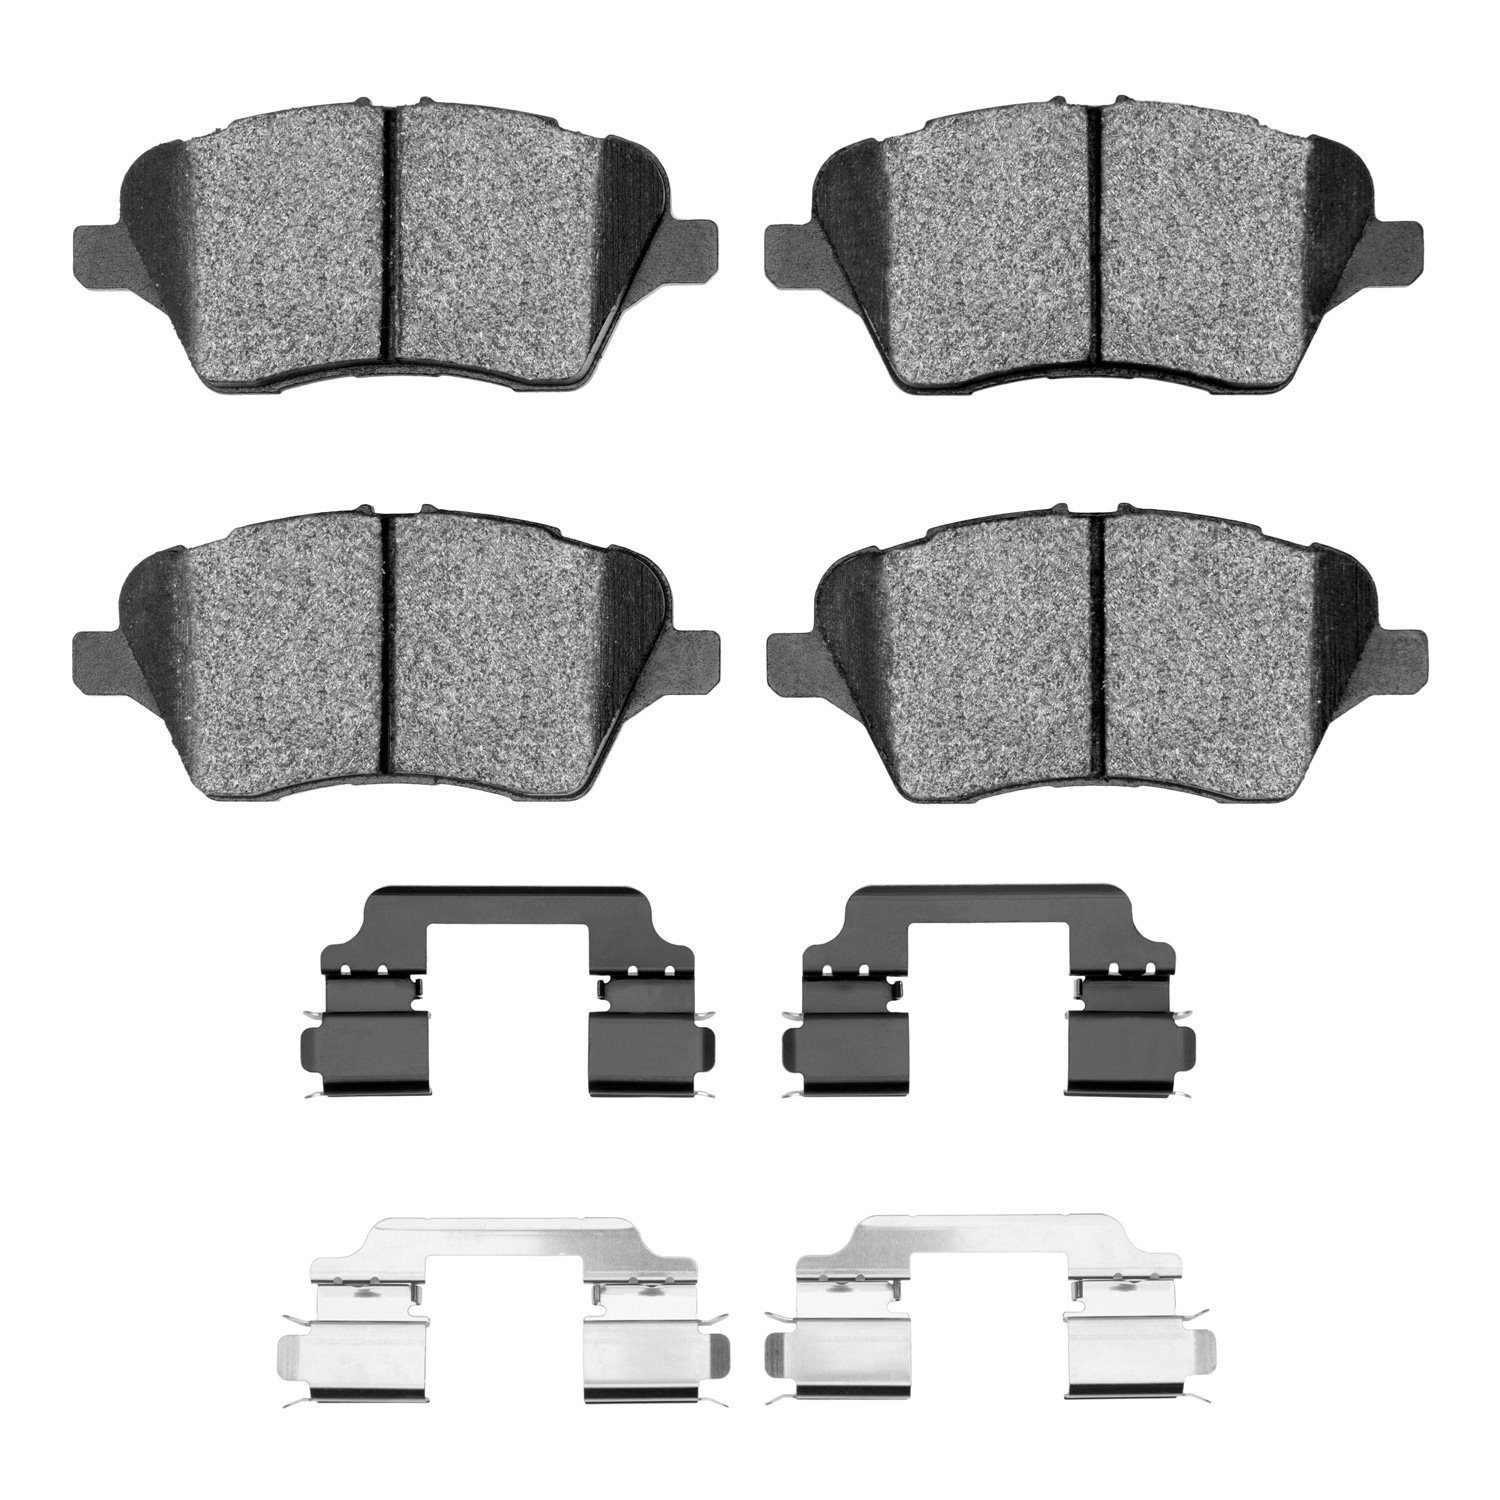 1600-1730-01 5000 Euro Ceramic Brake Pads & Hardware Kit, 2014-2019 Ford/Lincoln/Mercury/Mazda, Position: Front